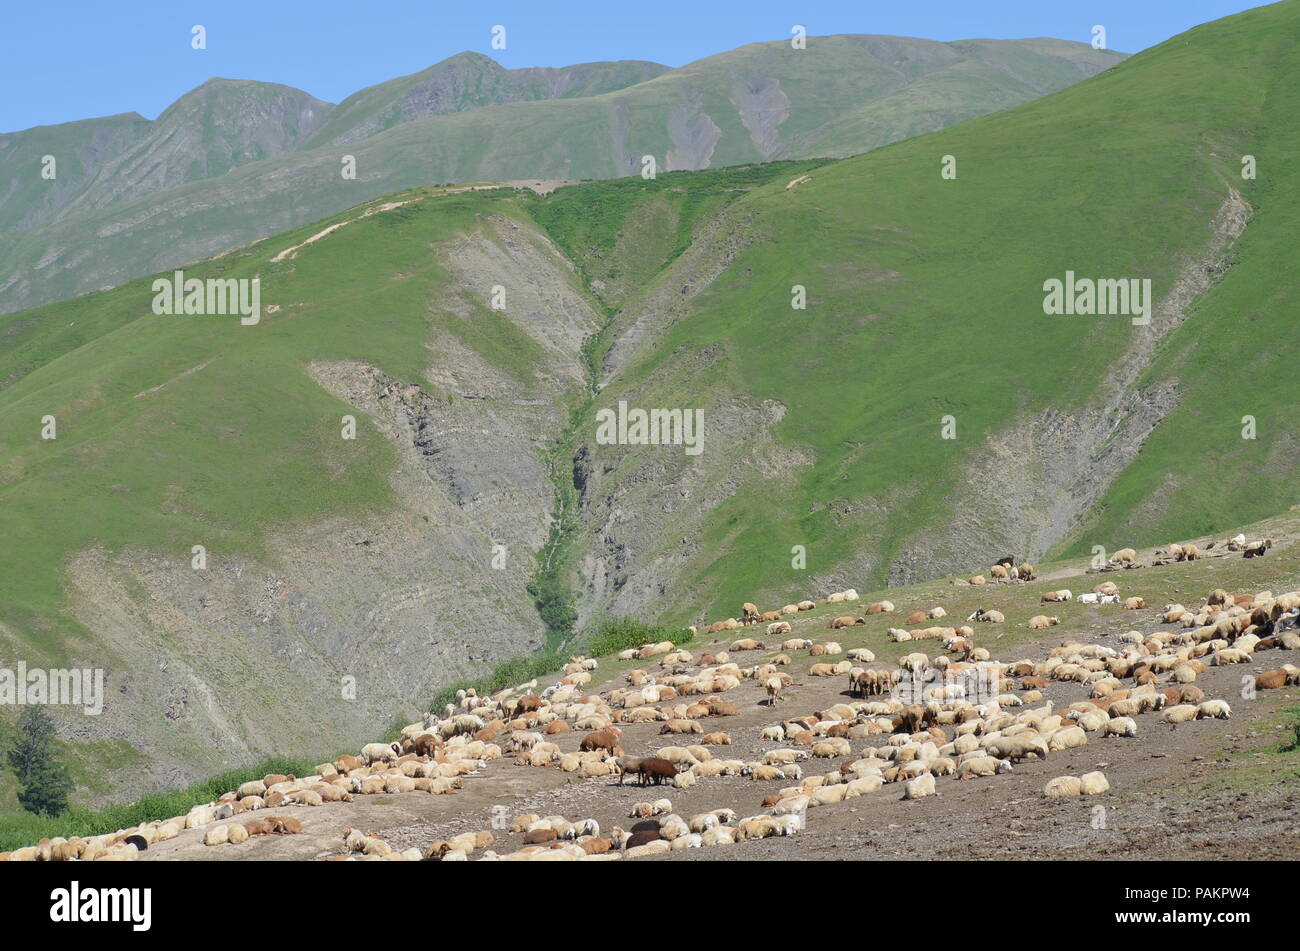 Sheep flock in the mountains near Ilisu, a Greater Caucasus village in north-western Azerbaijan Stock Photo